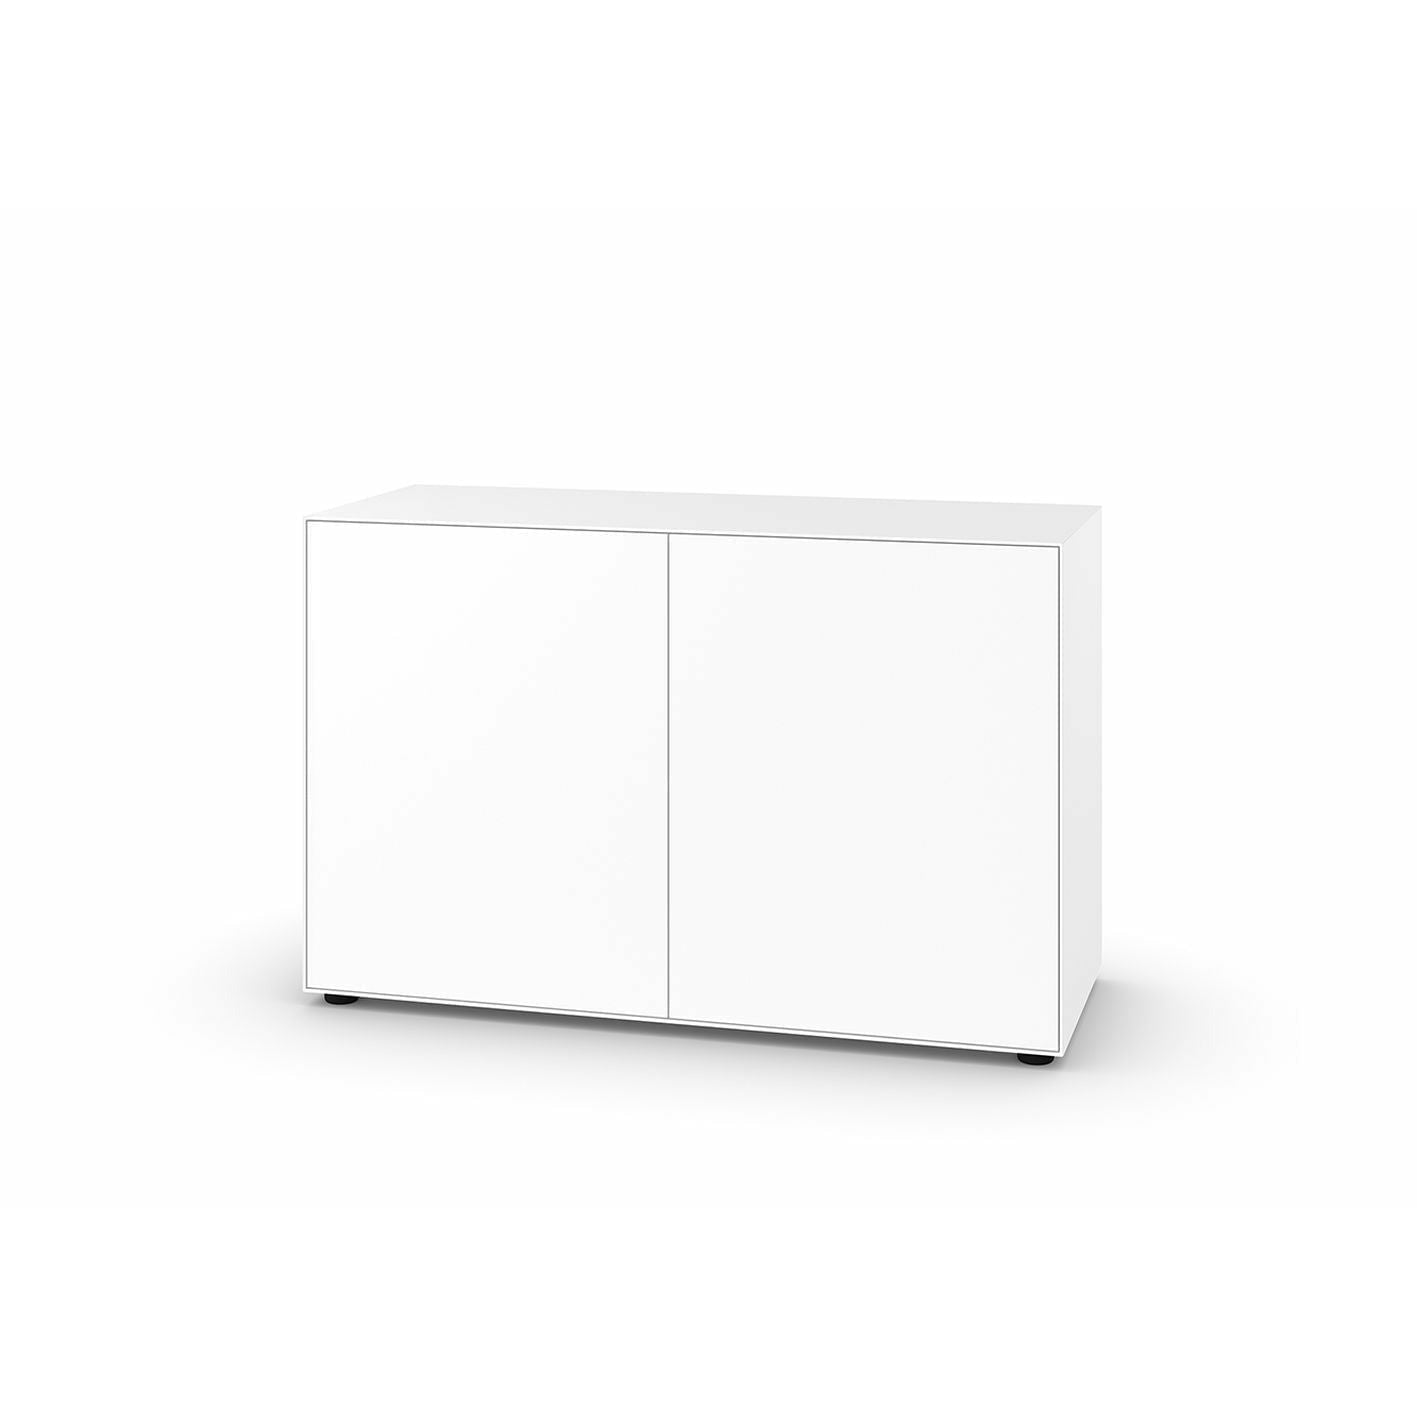 Piure NEX PUR BOX PORTE HX W 75X120 CM, 1 étagère, blanc